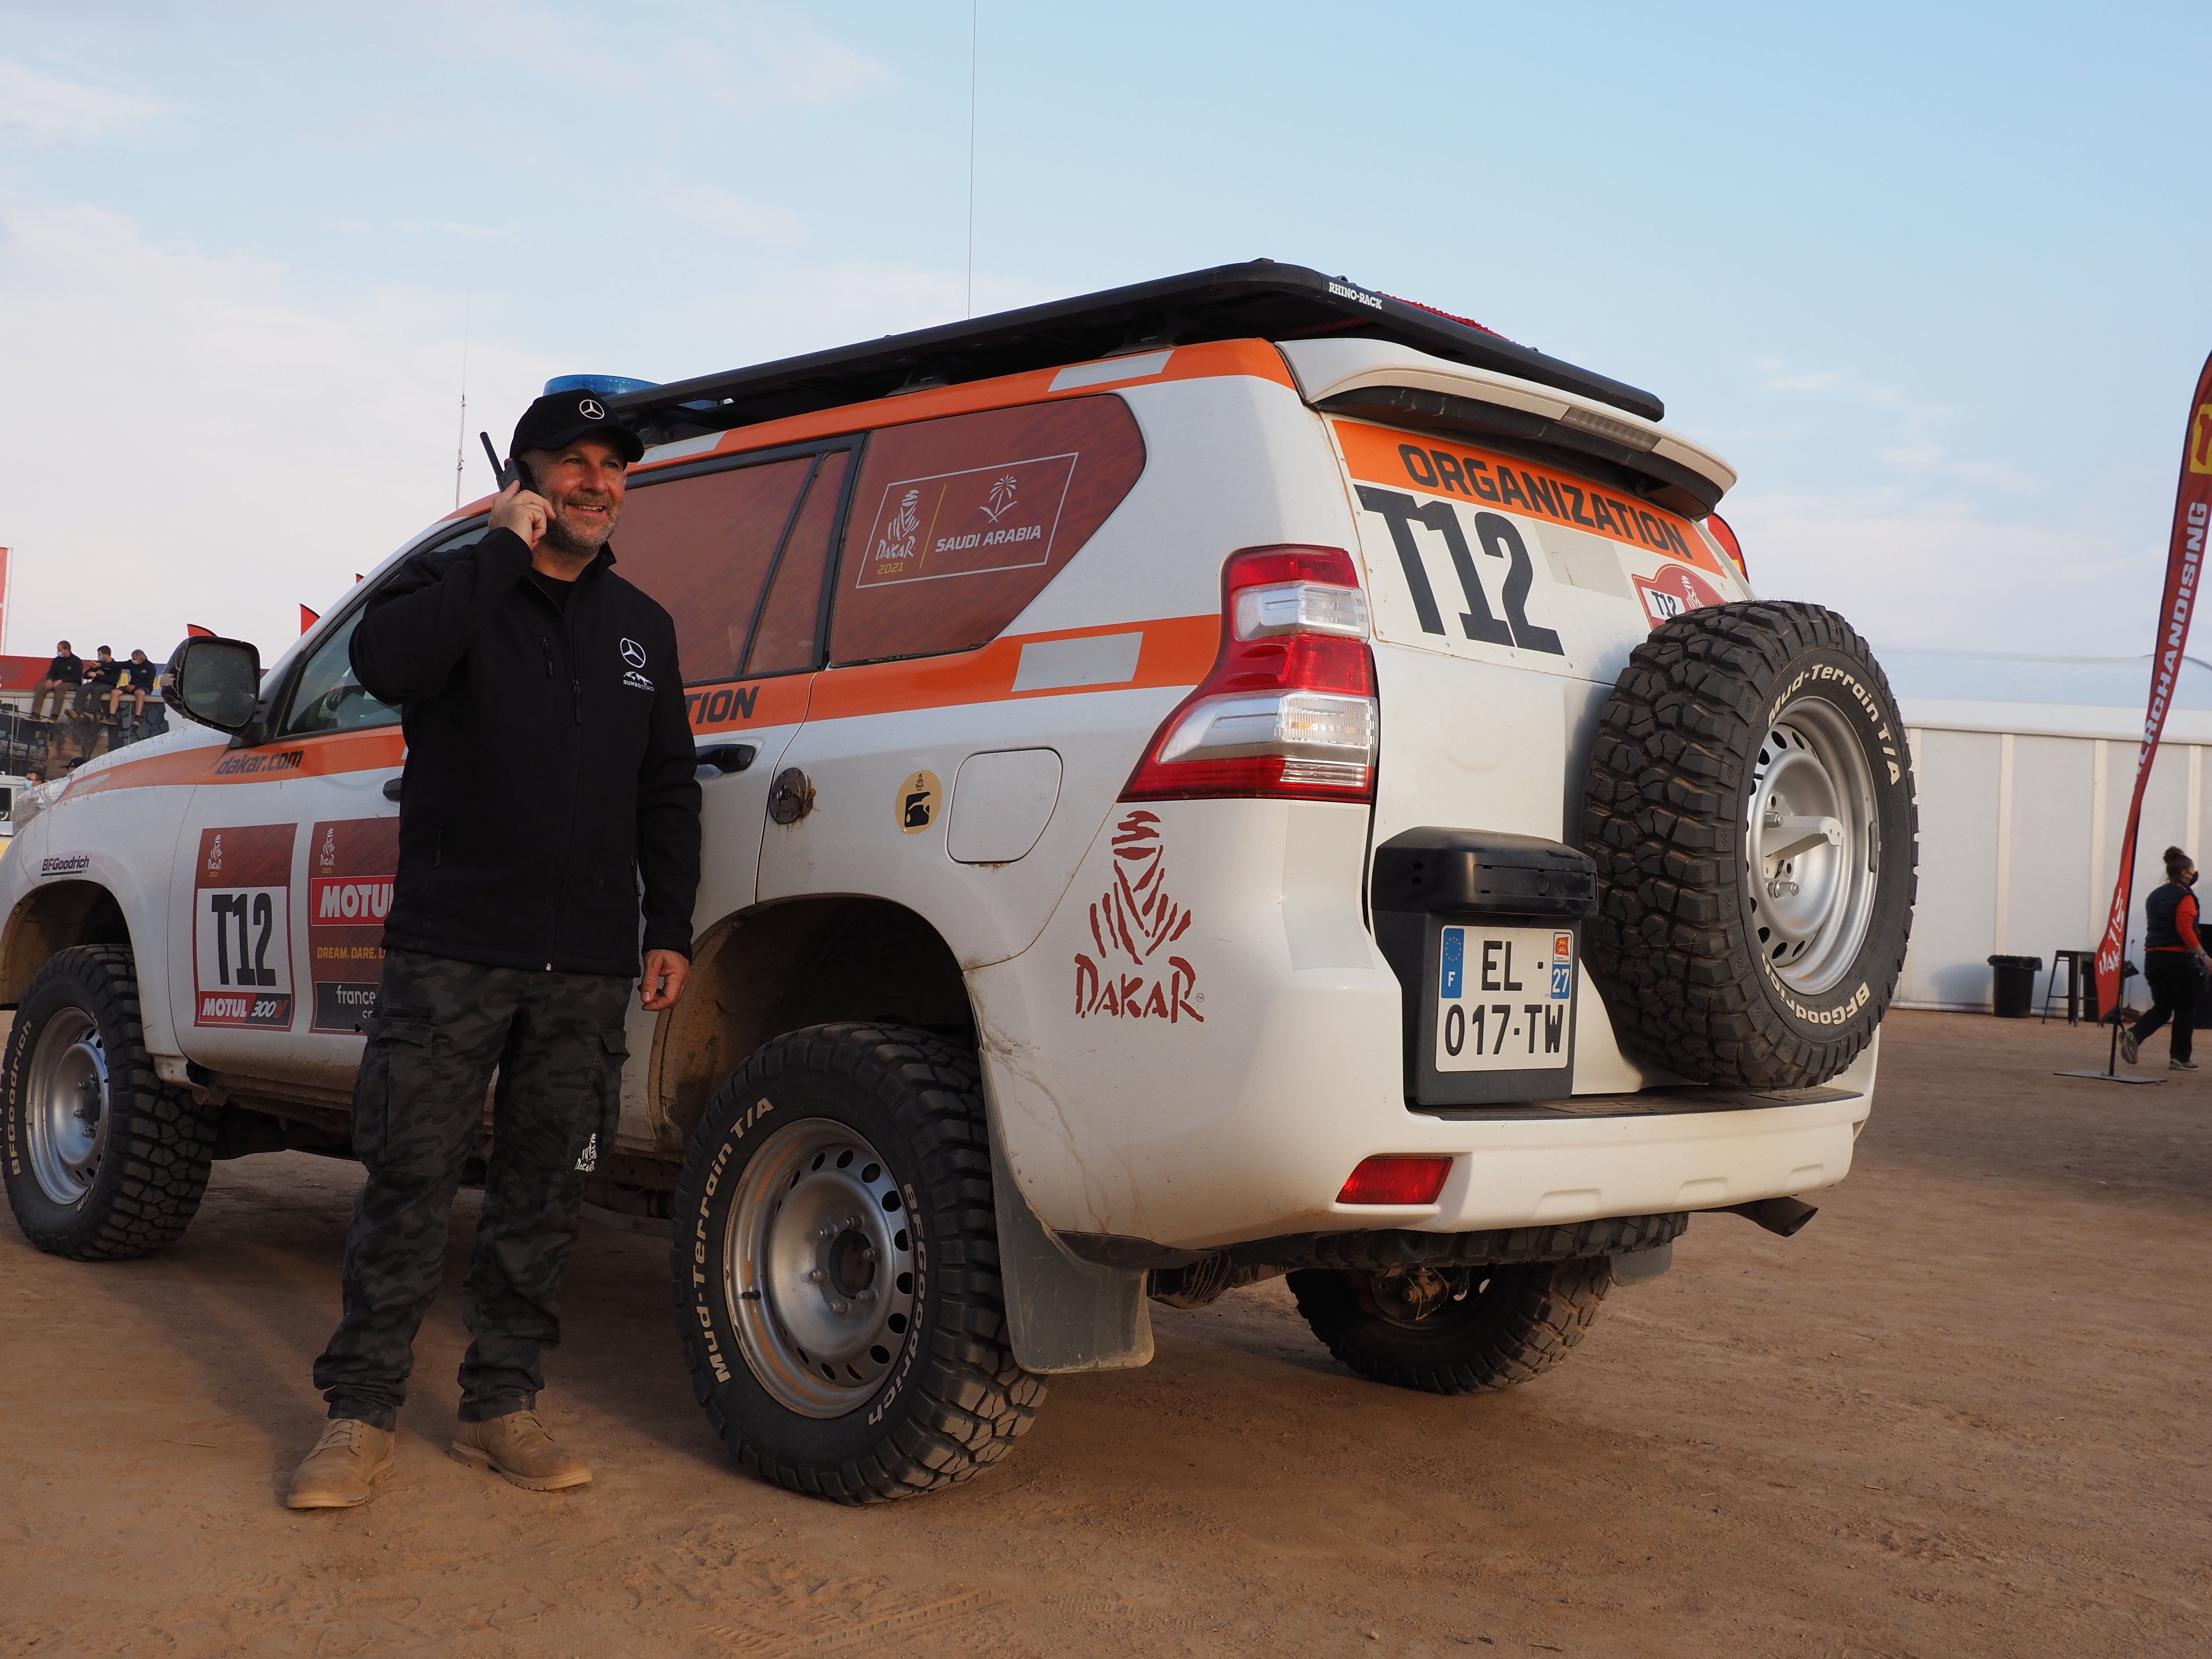 Meet Dakar Classic co-driver Luis Heras of the Rumbo Zero team